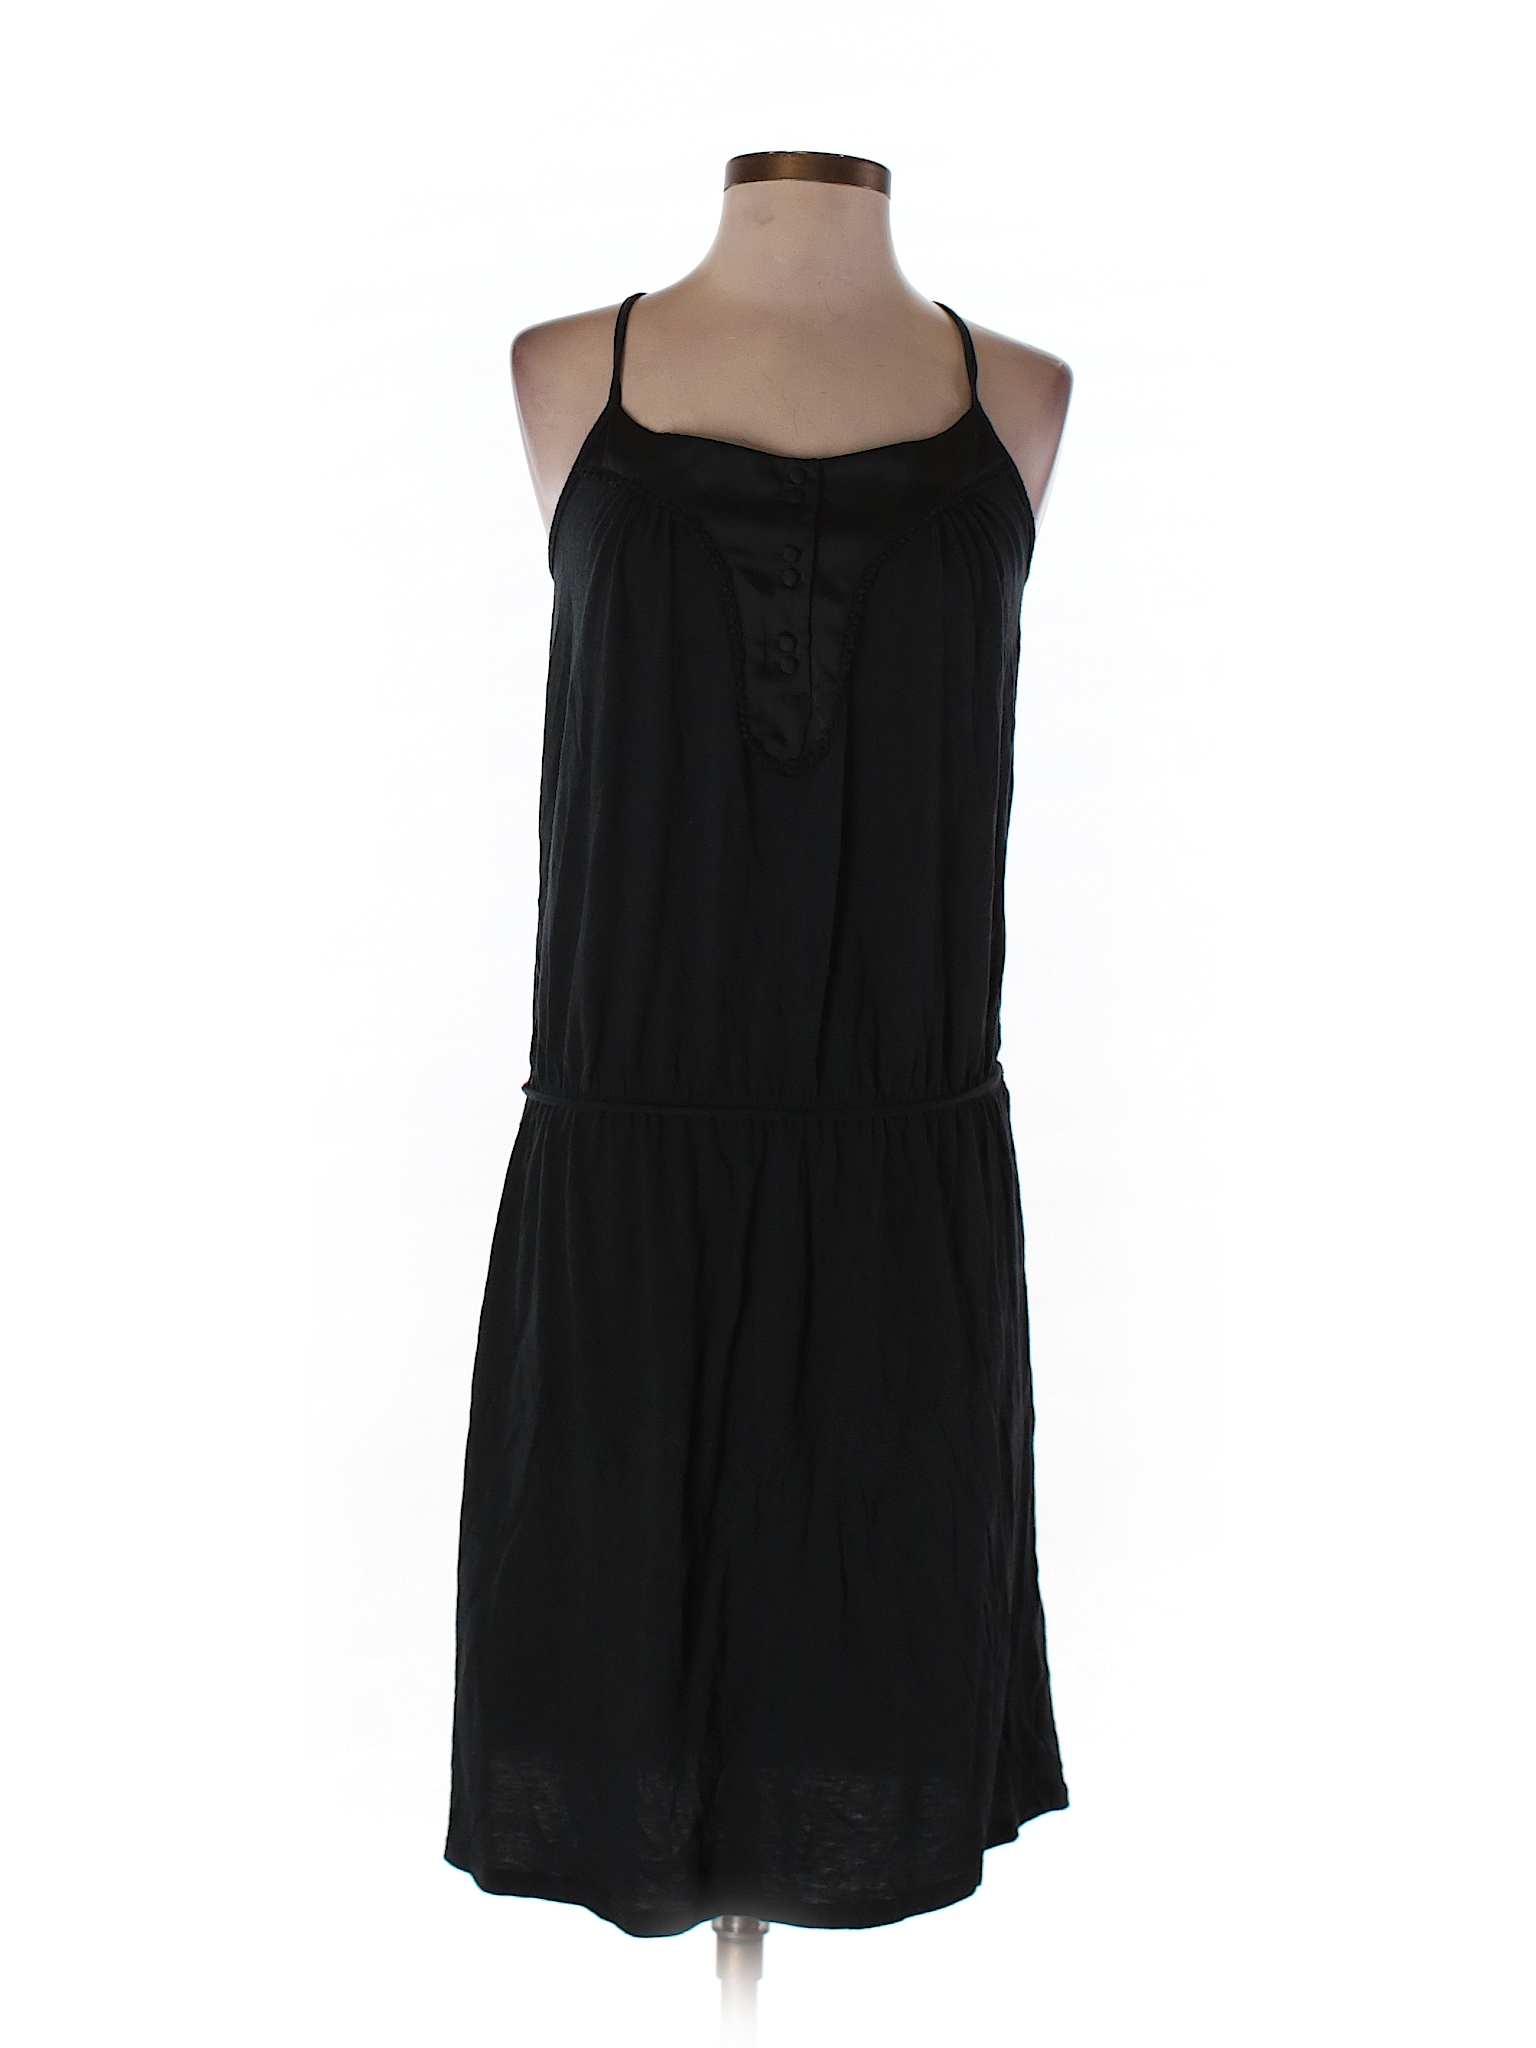 Gap Solid Black Casual Dress Size M - 69% off | thredUP